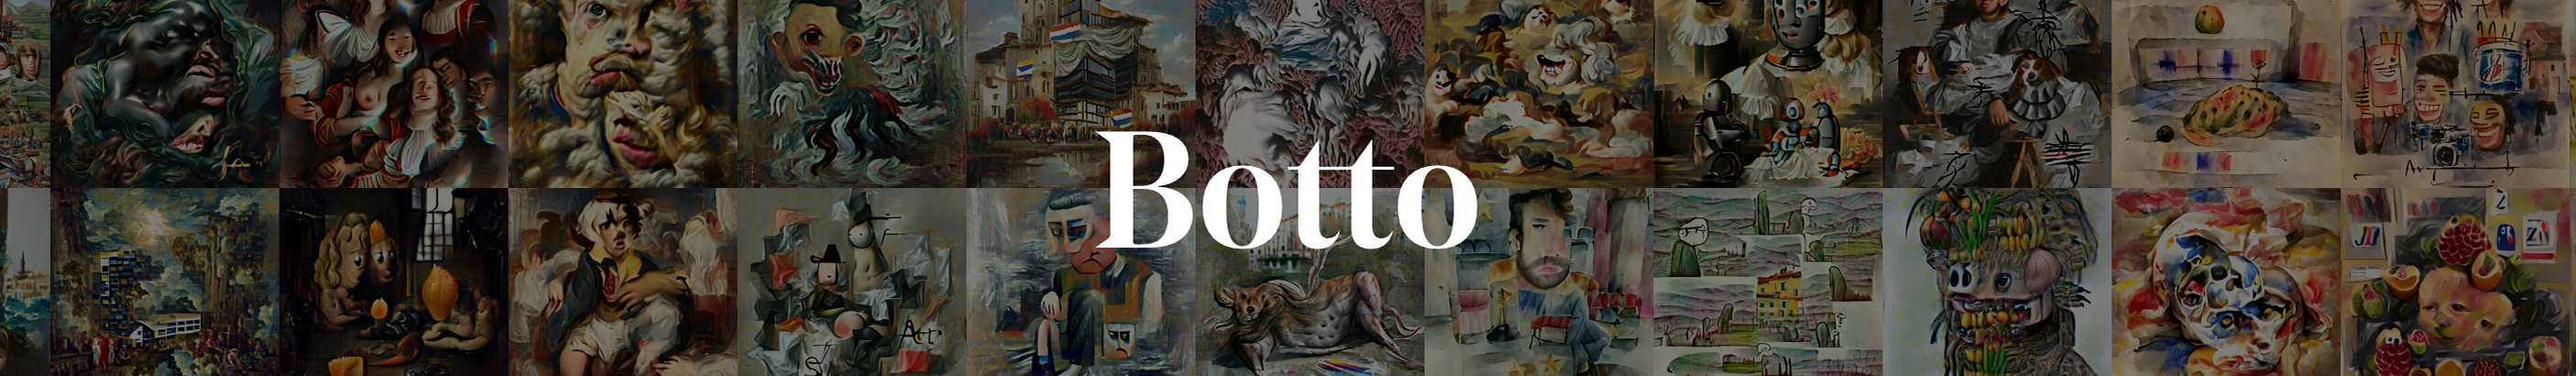 Banner de perfil de Botto Project